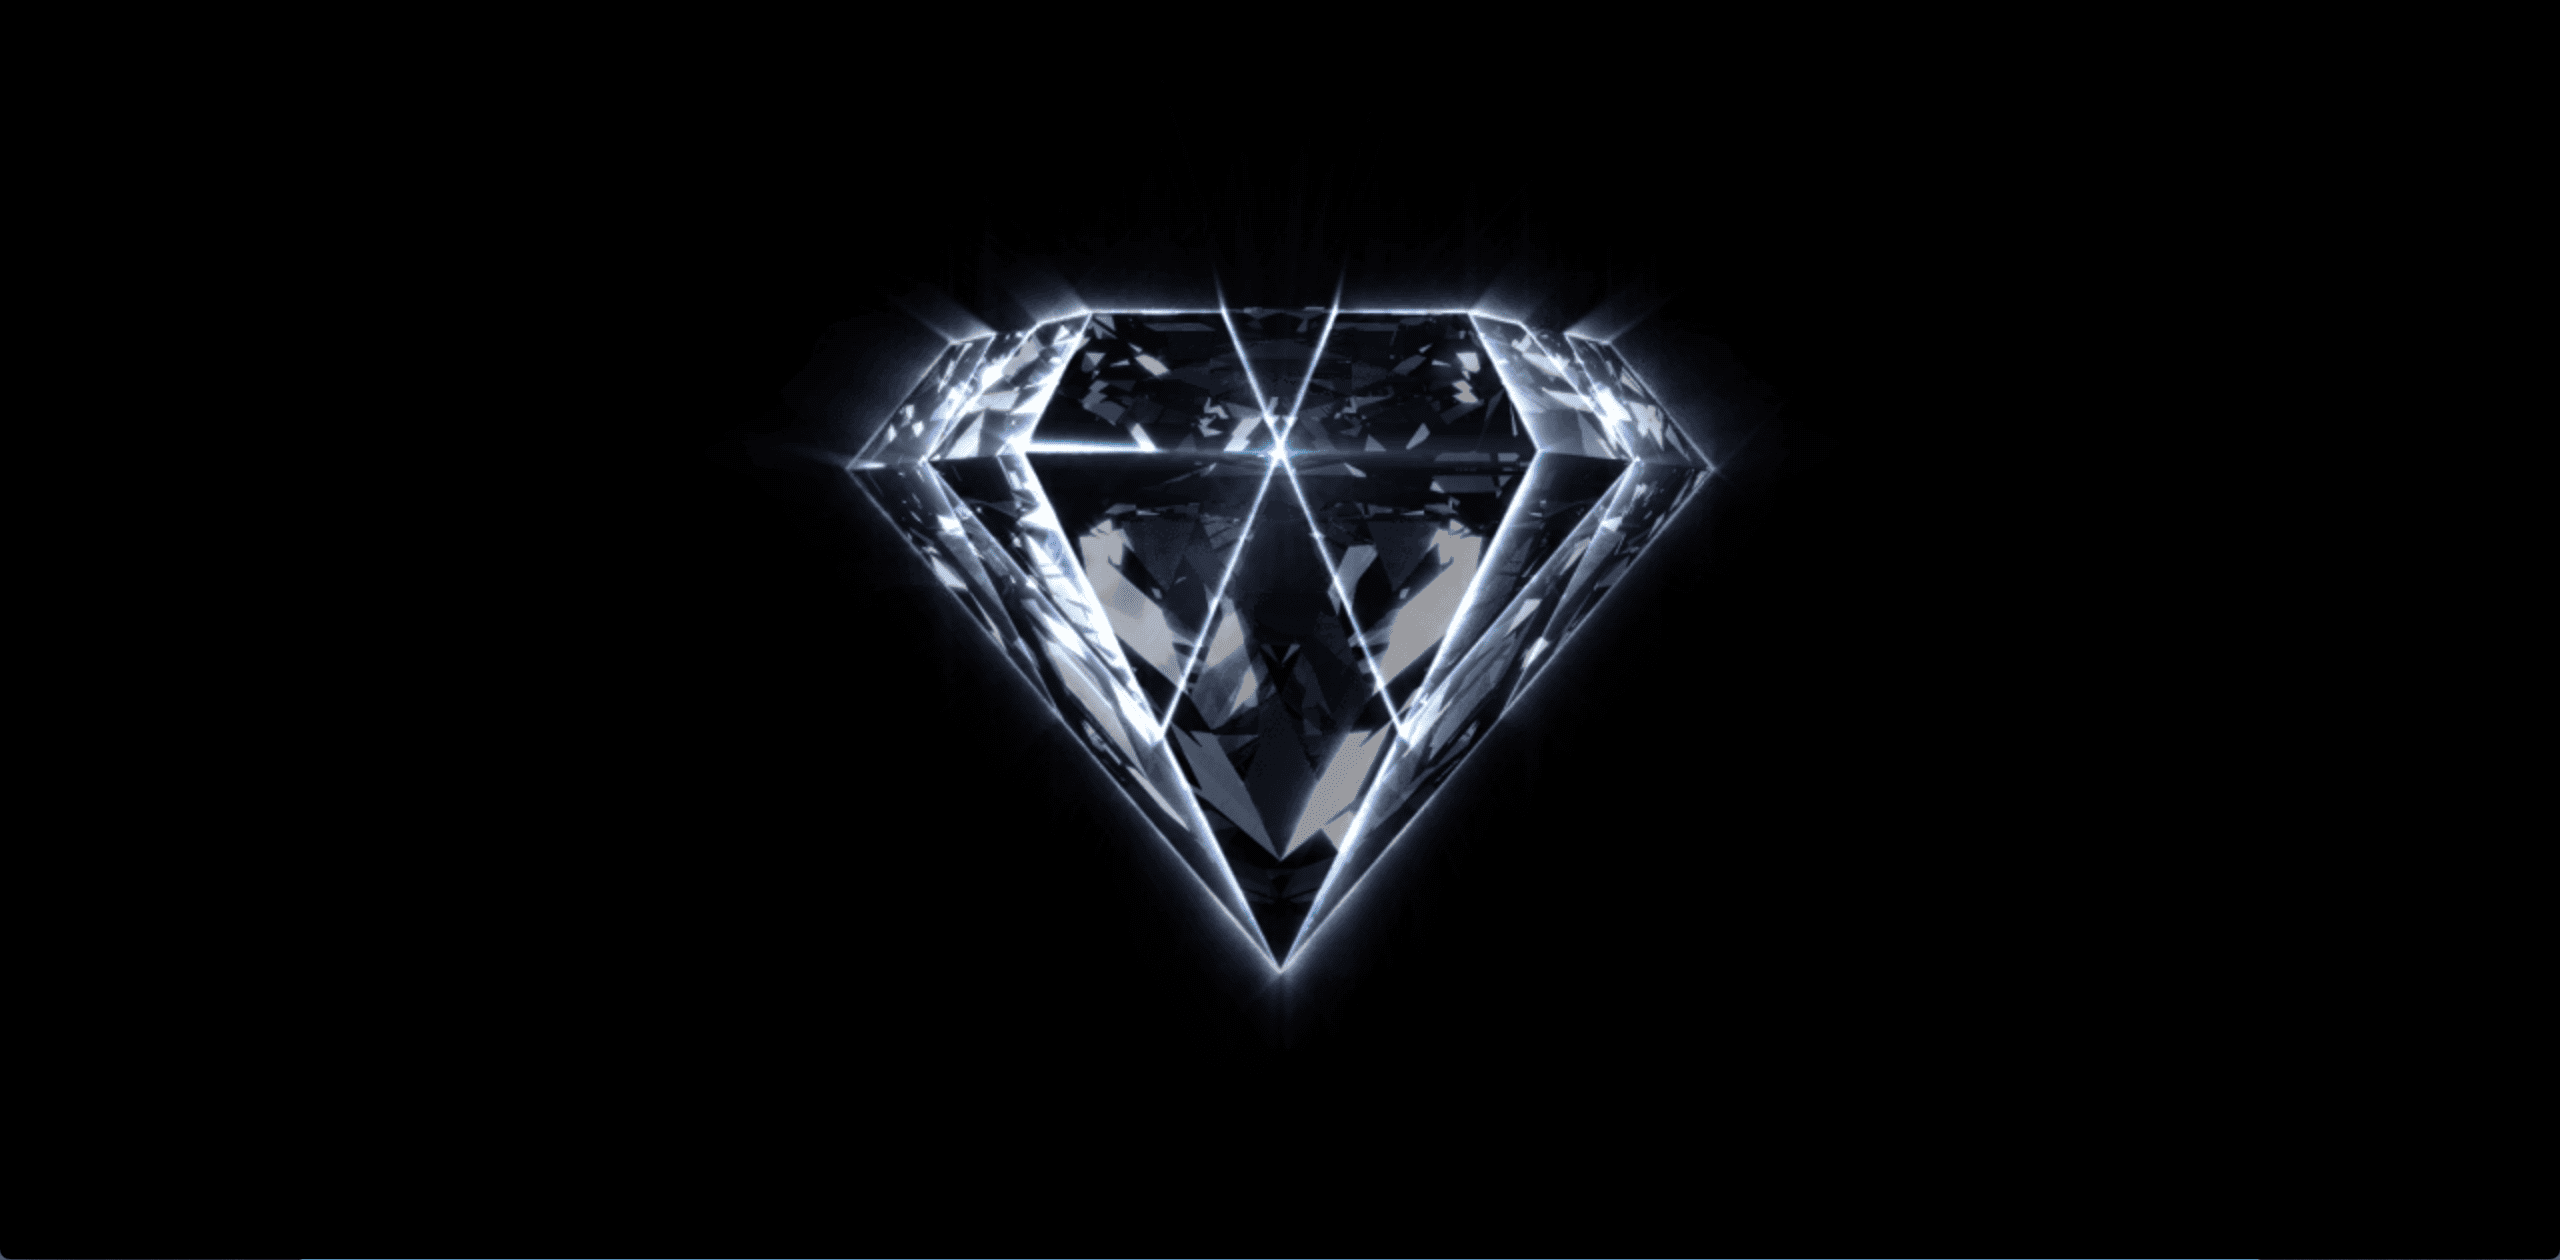 exo logo wallpaper,black,diamond,light,darkness,black and white